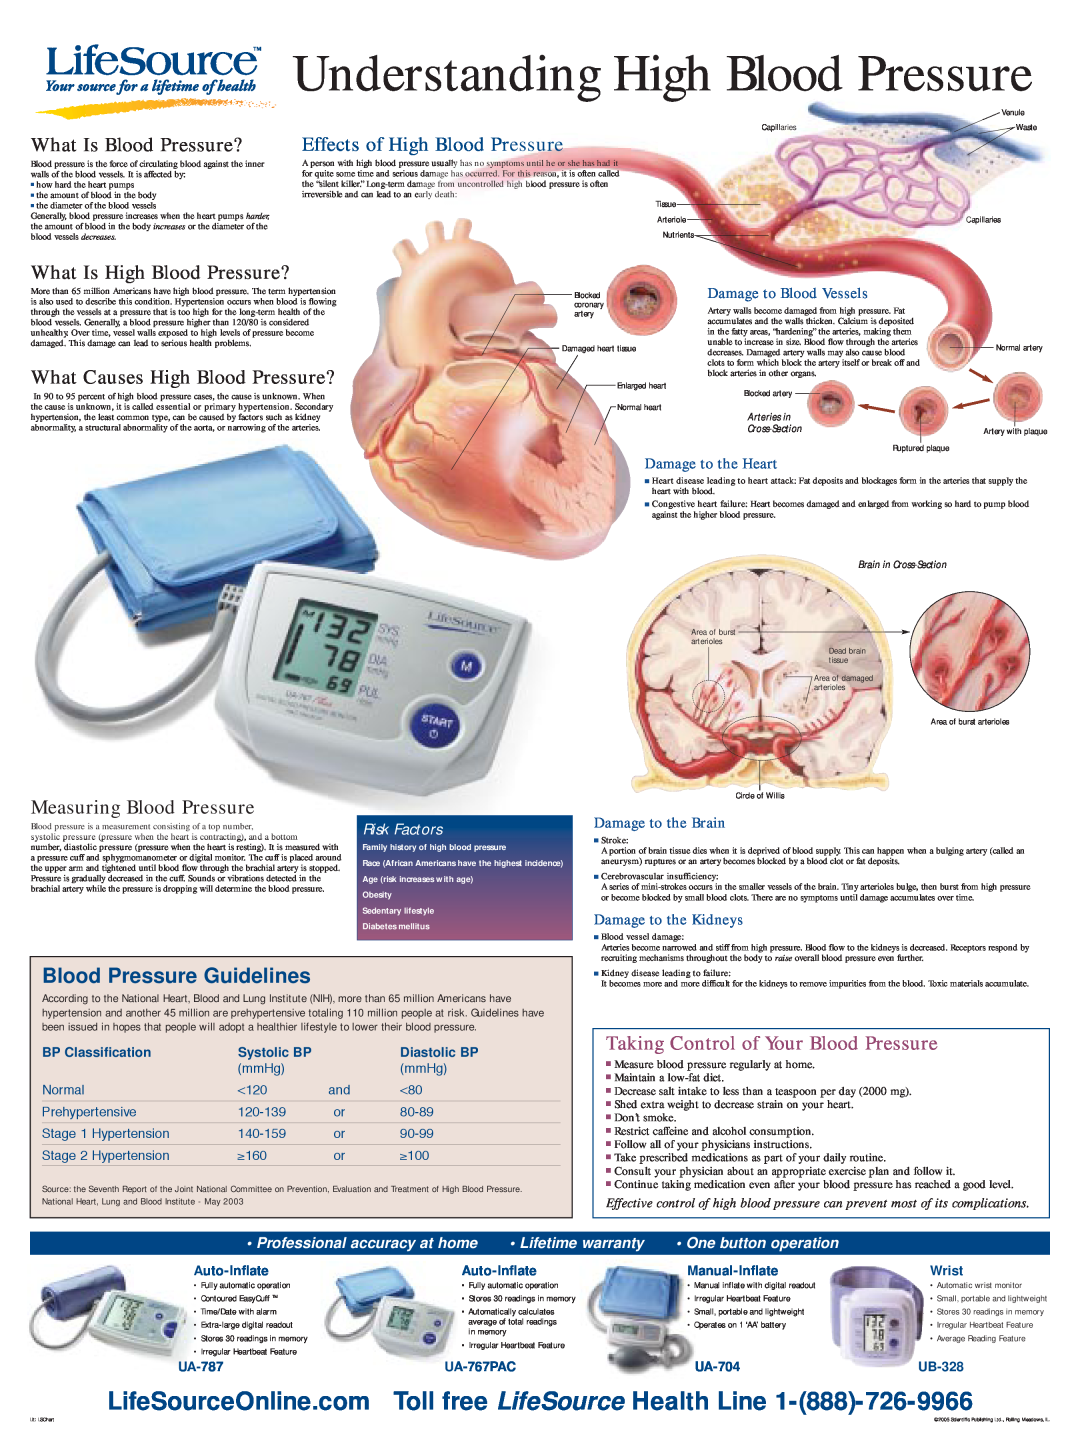 LifeSource UA-787, UB-328 manual Understanding High Blood Pressure, LifeSourceOnline.com, Toll free LifeSource Health Line 